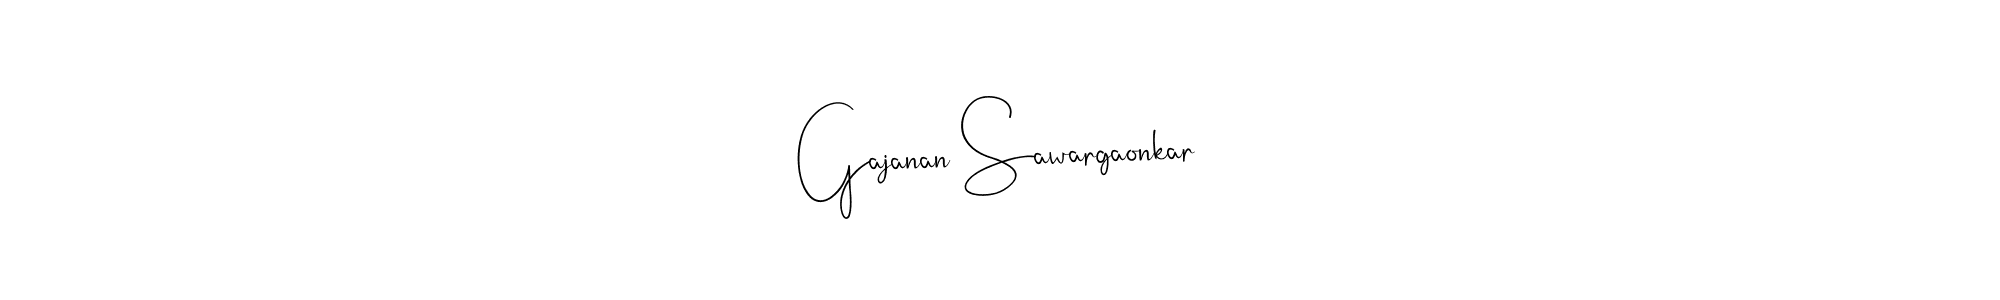 How to Draw Gajanan Sawargaonkar signature style? Andilay-7BmLP is a latest design signature styles for name Gajanan Sawargaonkar. Gajanan Sawargaonkar signature style 4 images and pictures png